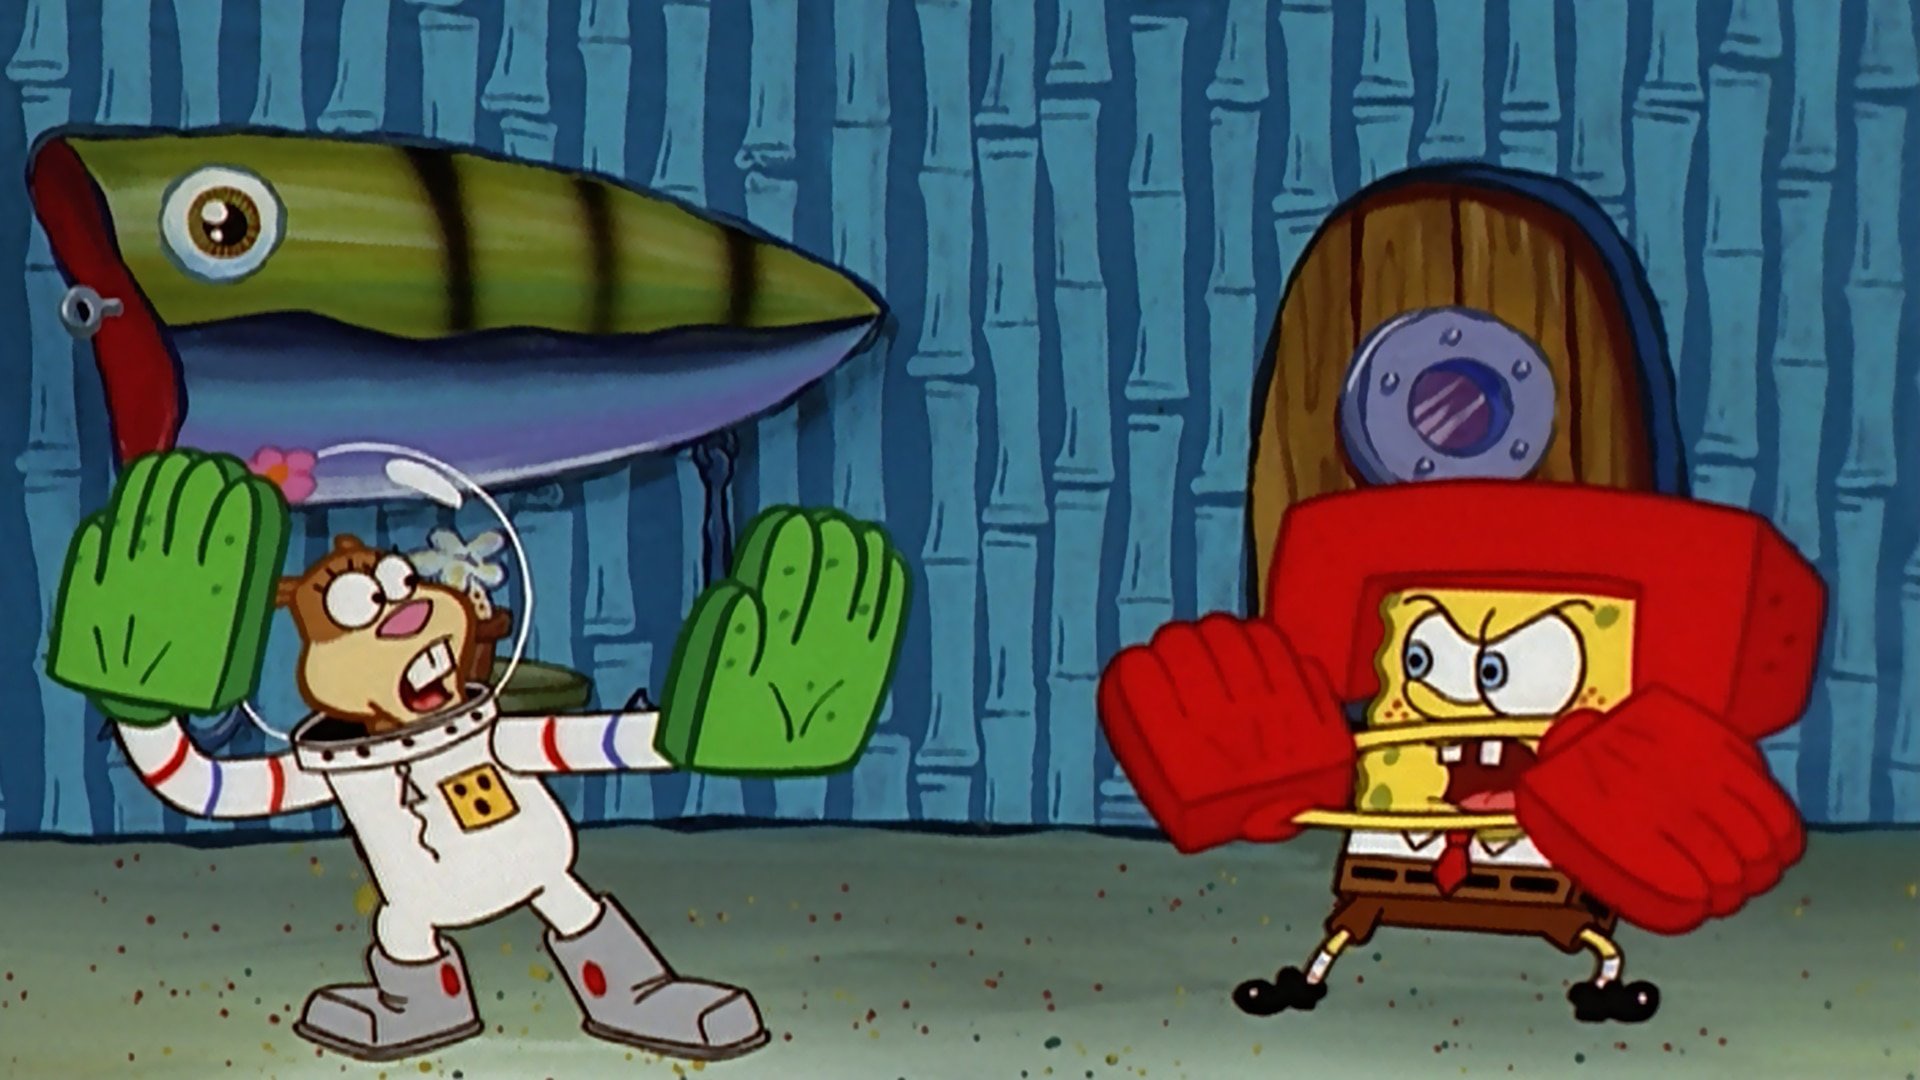 spongebob squarepants season 1 episodes